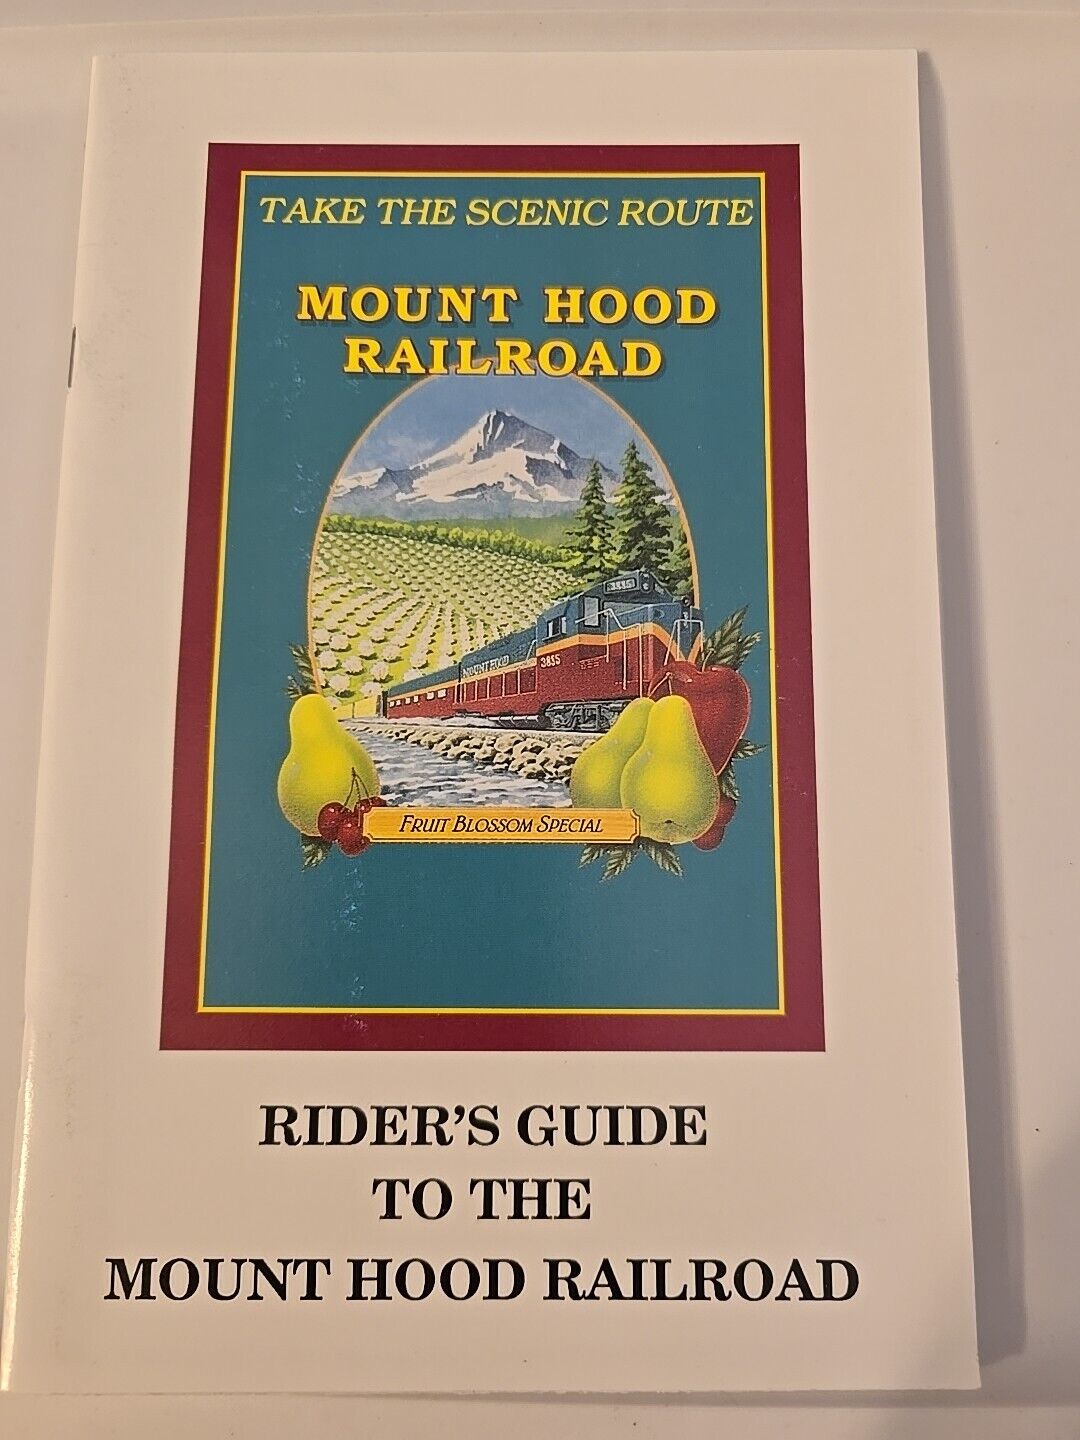 Mount Hood Railroad Guide